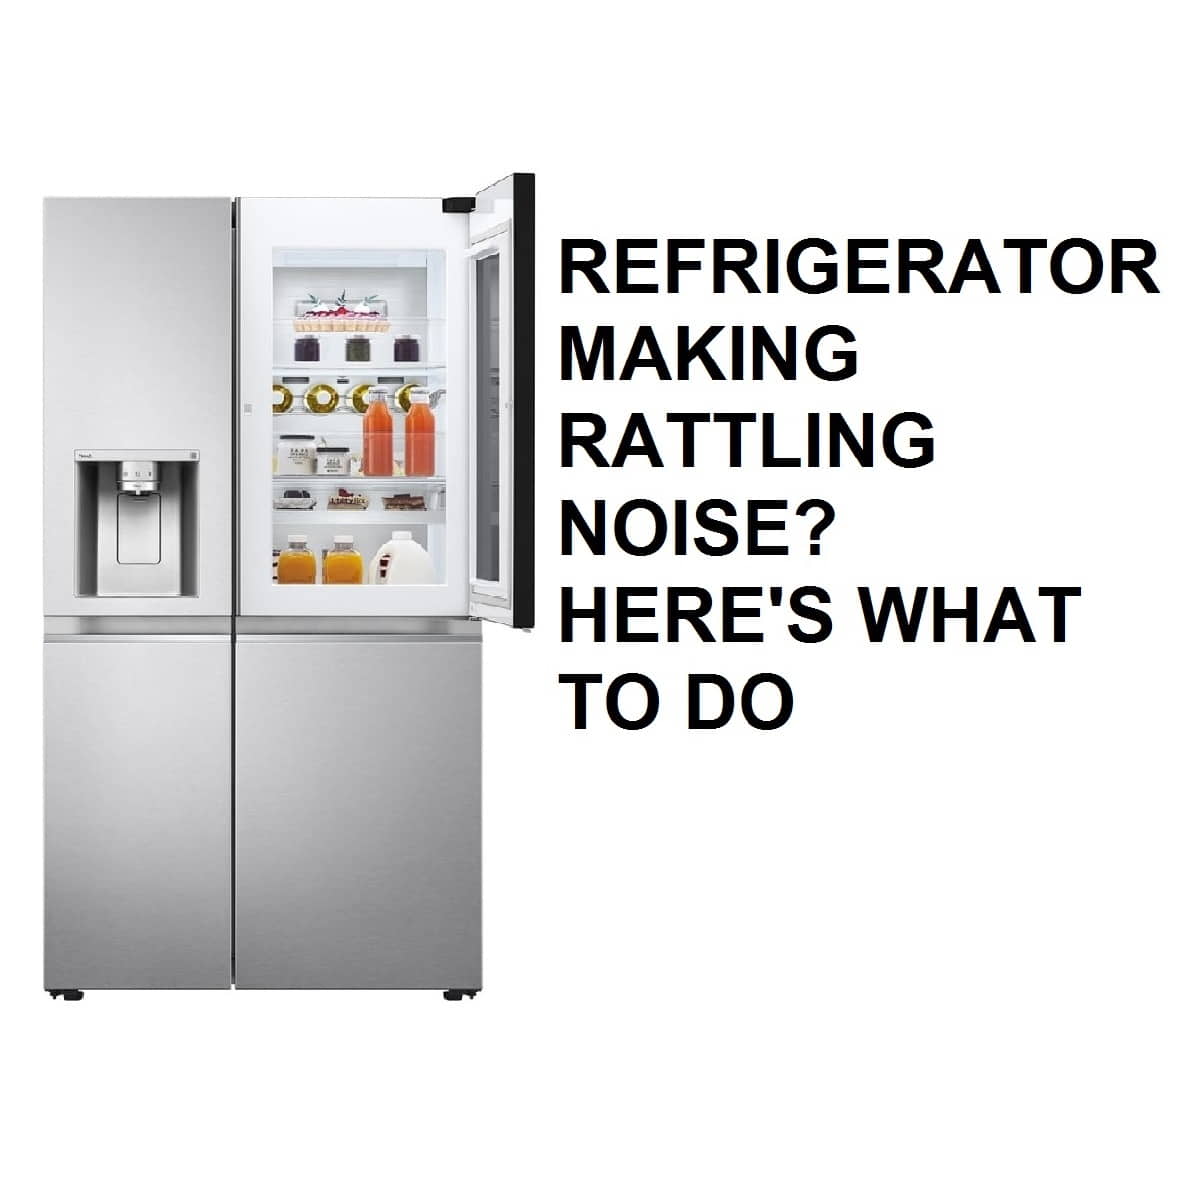 Refrigerator makes rattling noise